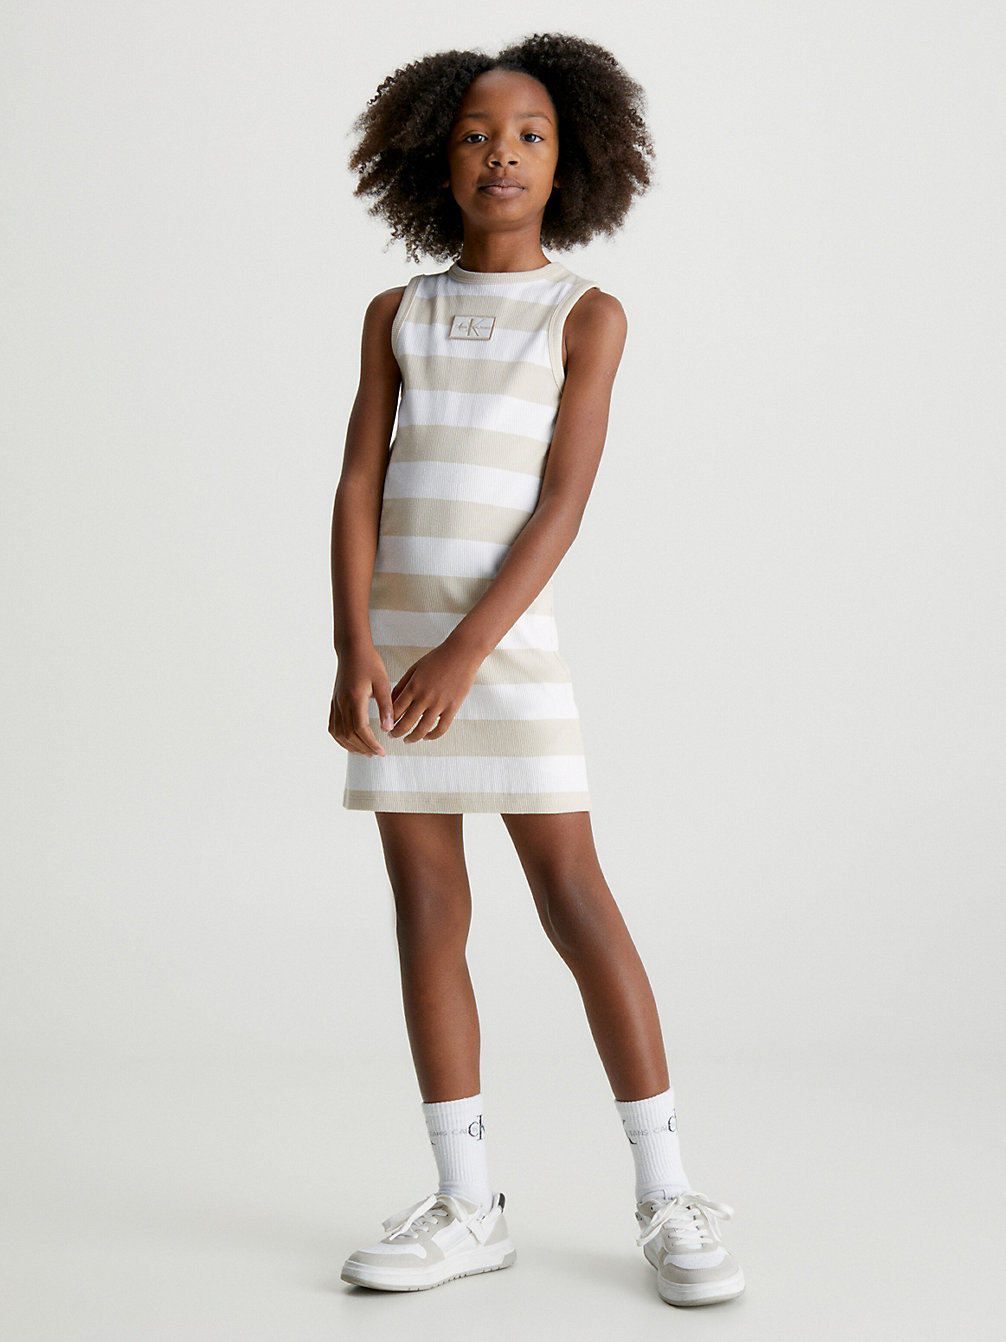 BRIGHT WHITE / CLASSIC BEIGE Ribbed Sleeveless Dress undefined girls Calvin Klein